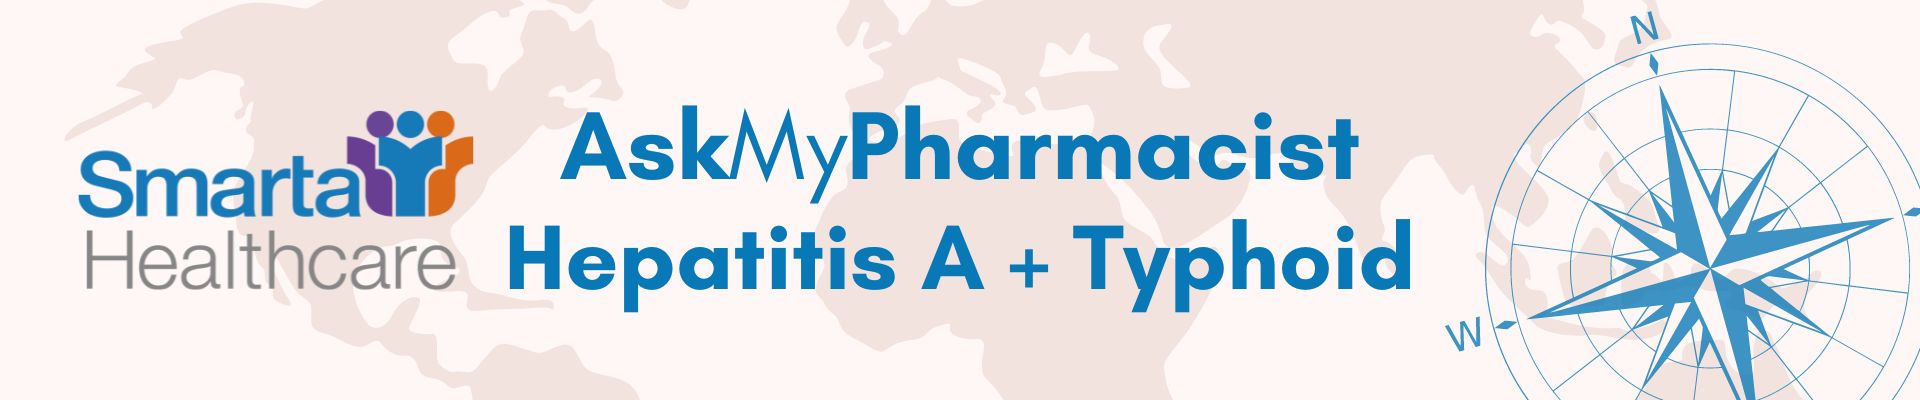 Smarta Healthcare AskMyPharmacist FAQs Hepatitis A + Typhoid 